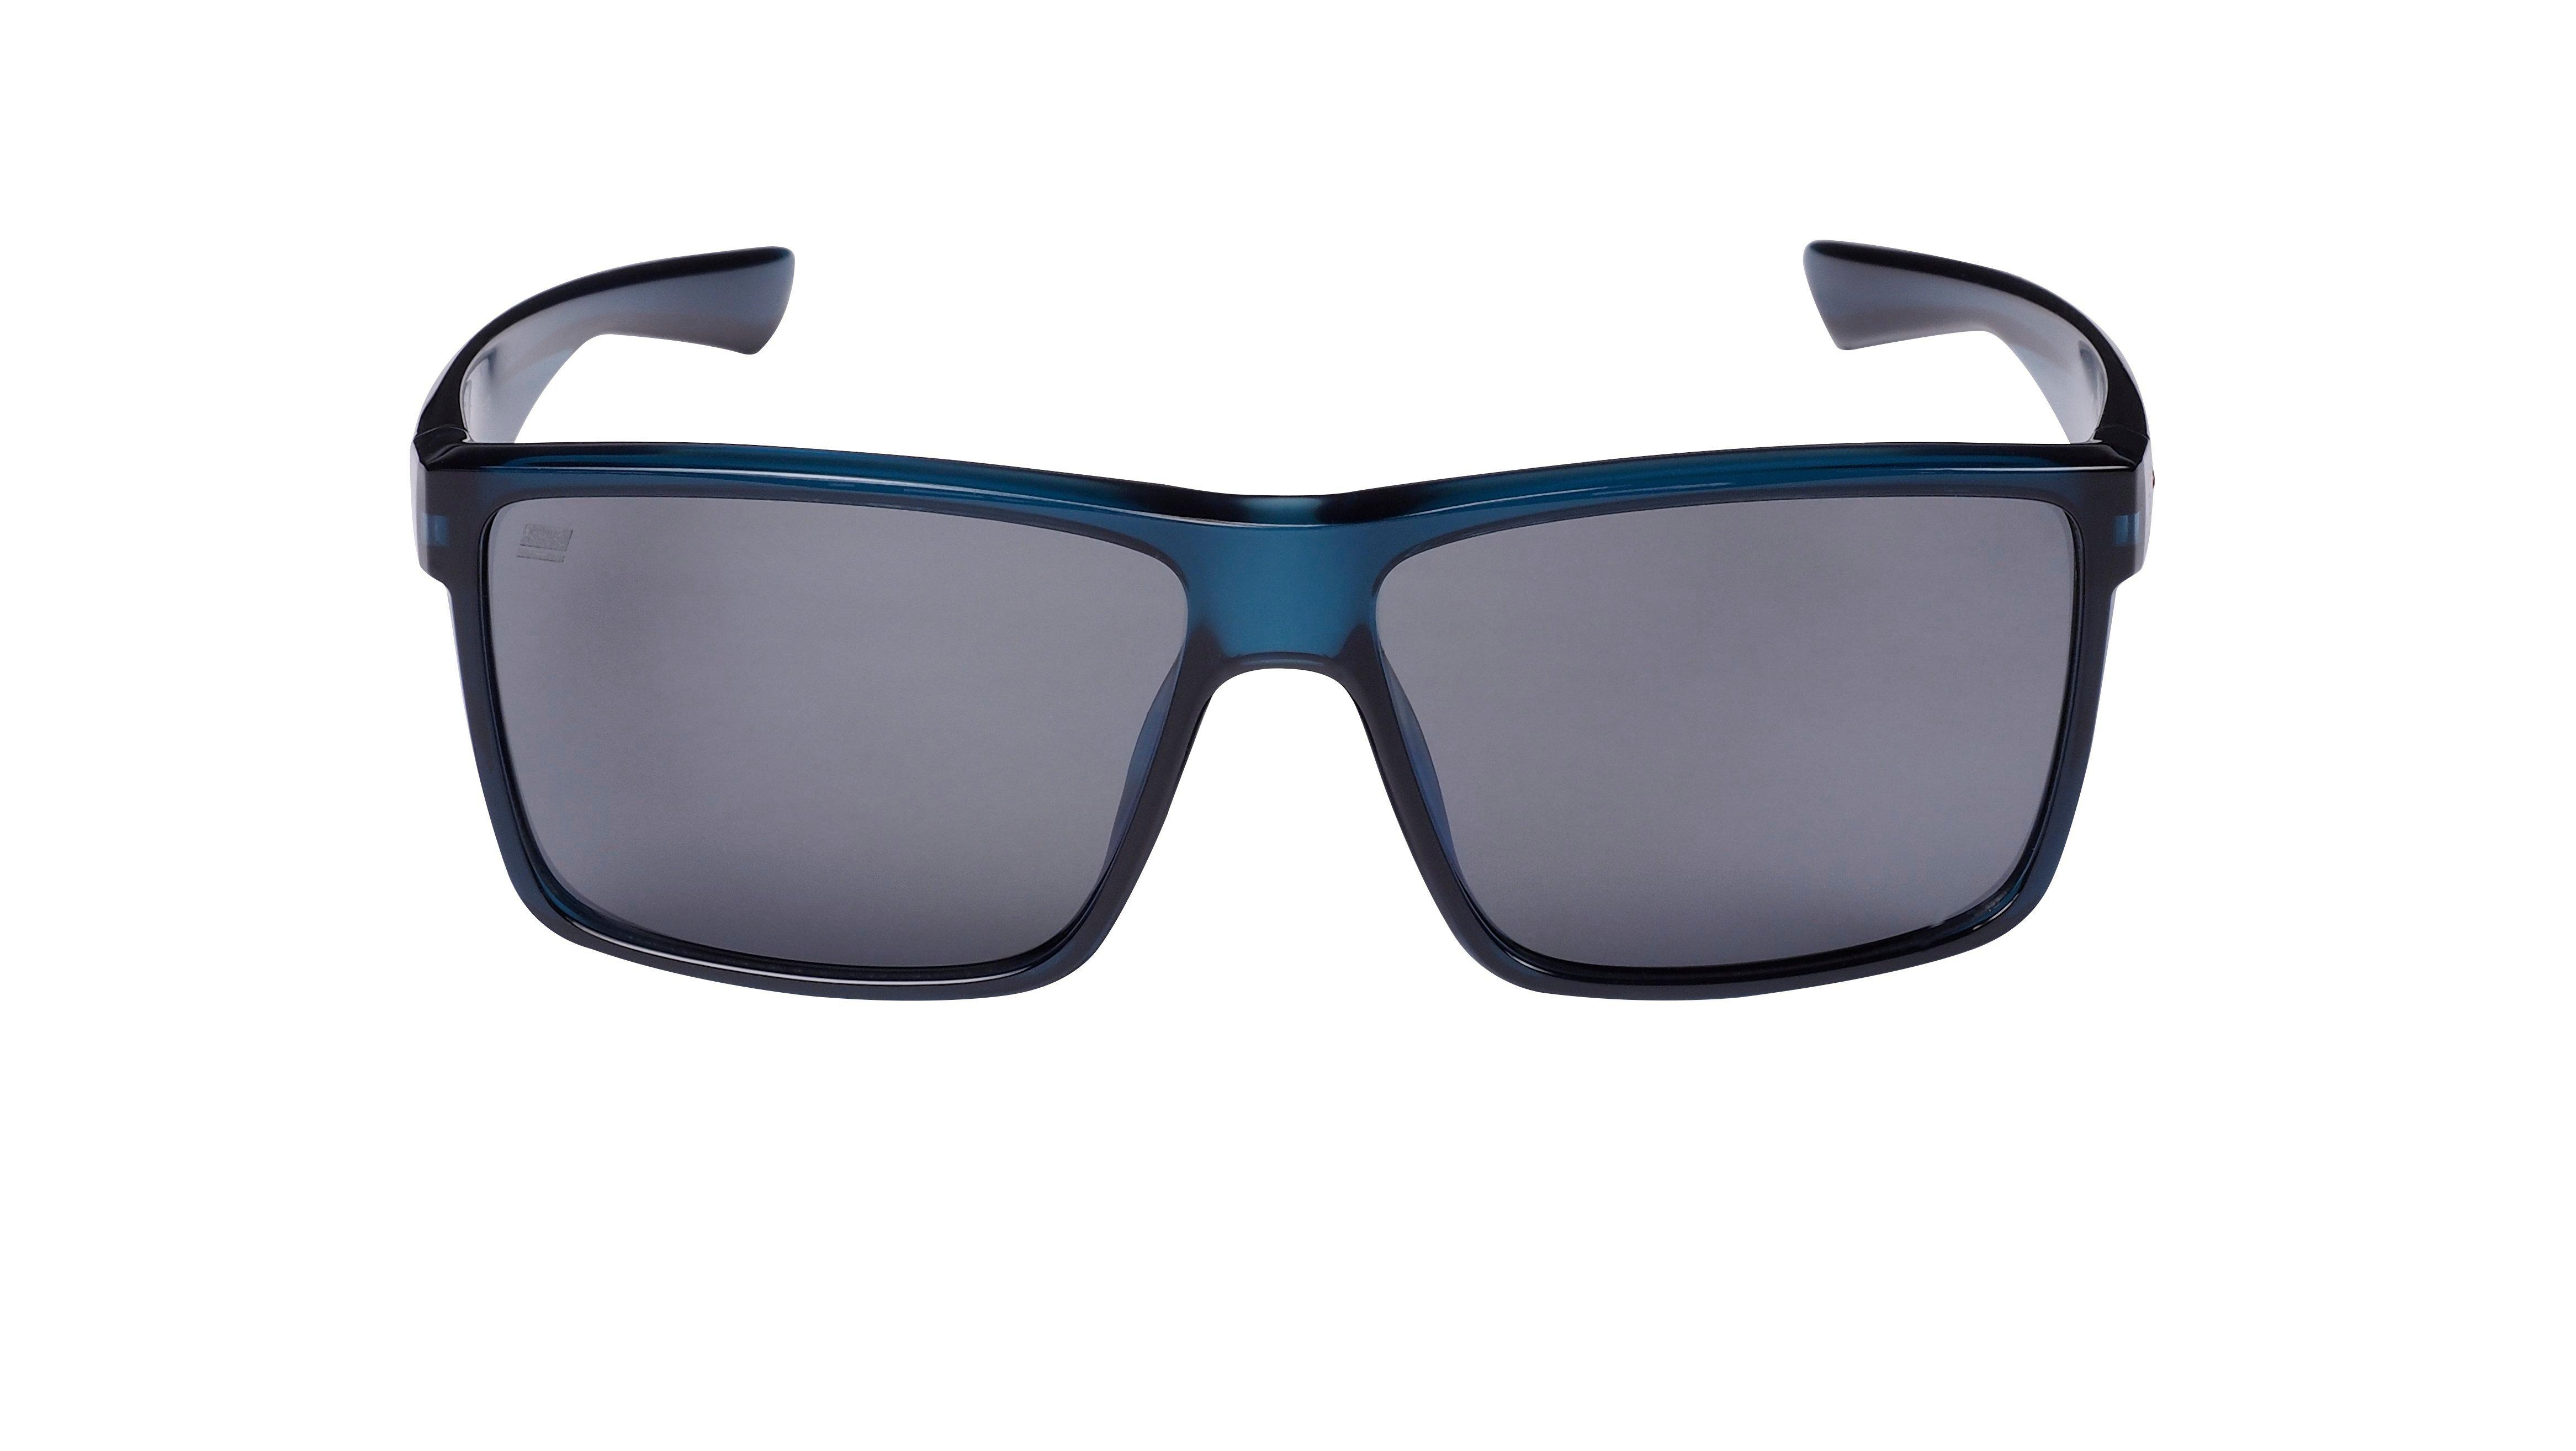 Abu Garcia Spike Eyewear Polarized Sunglasses - Cobalt Blue